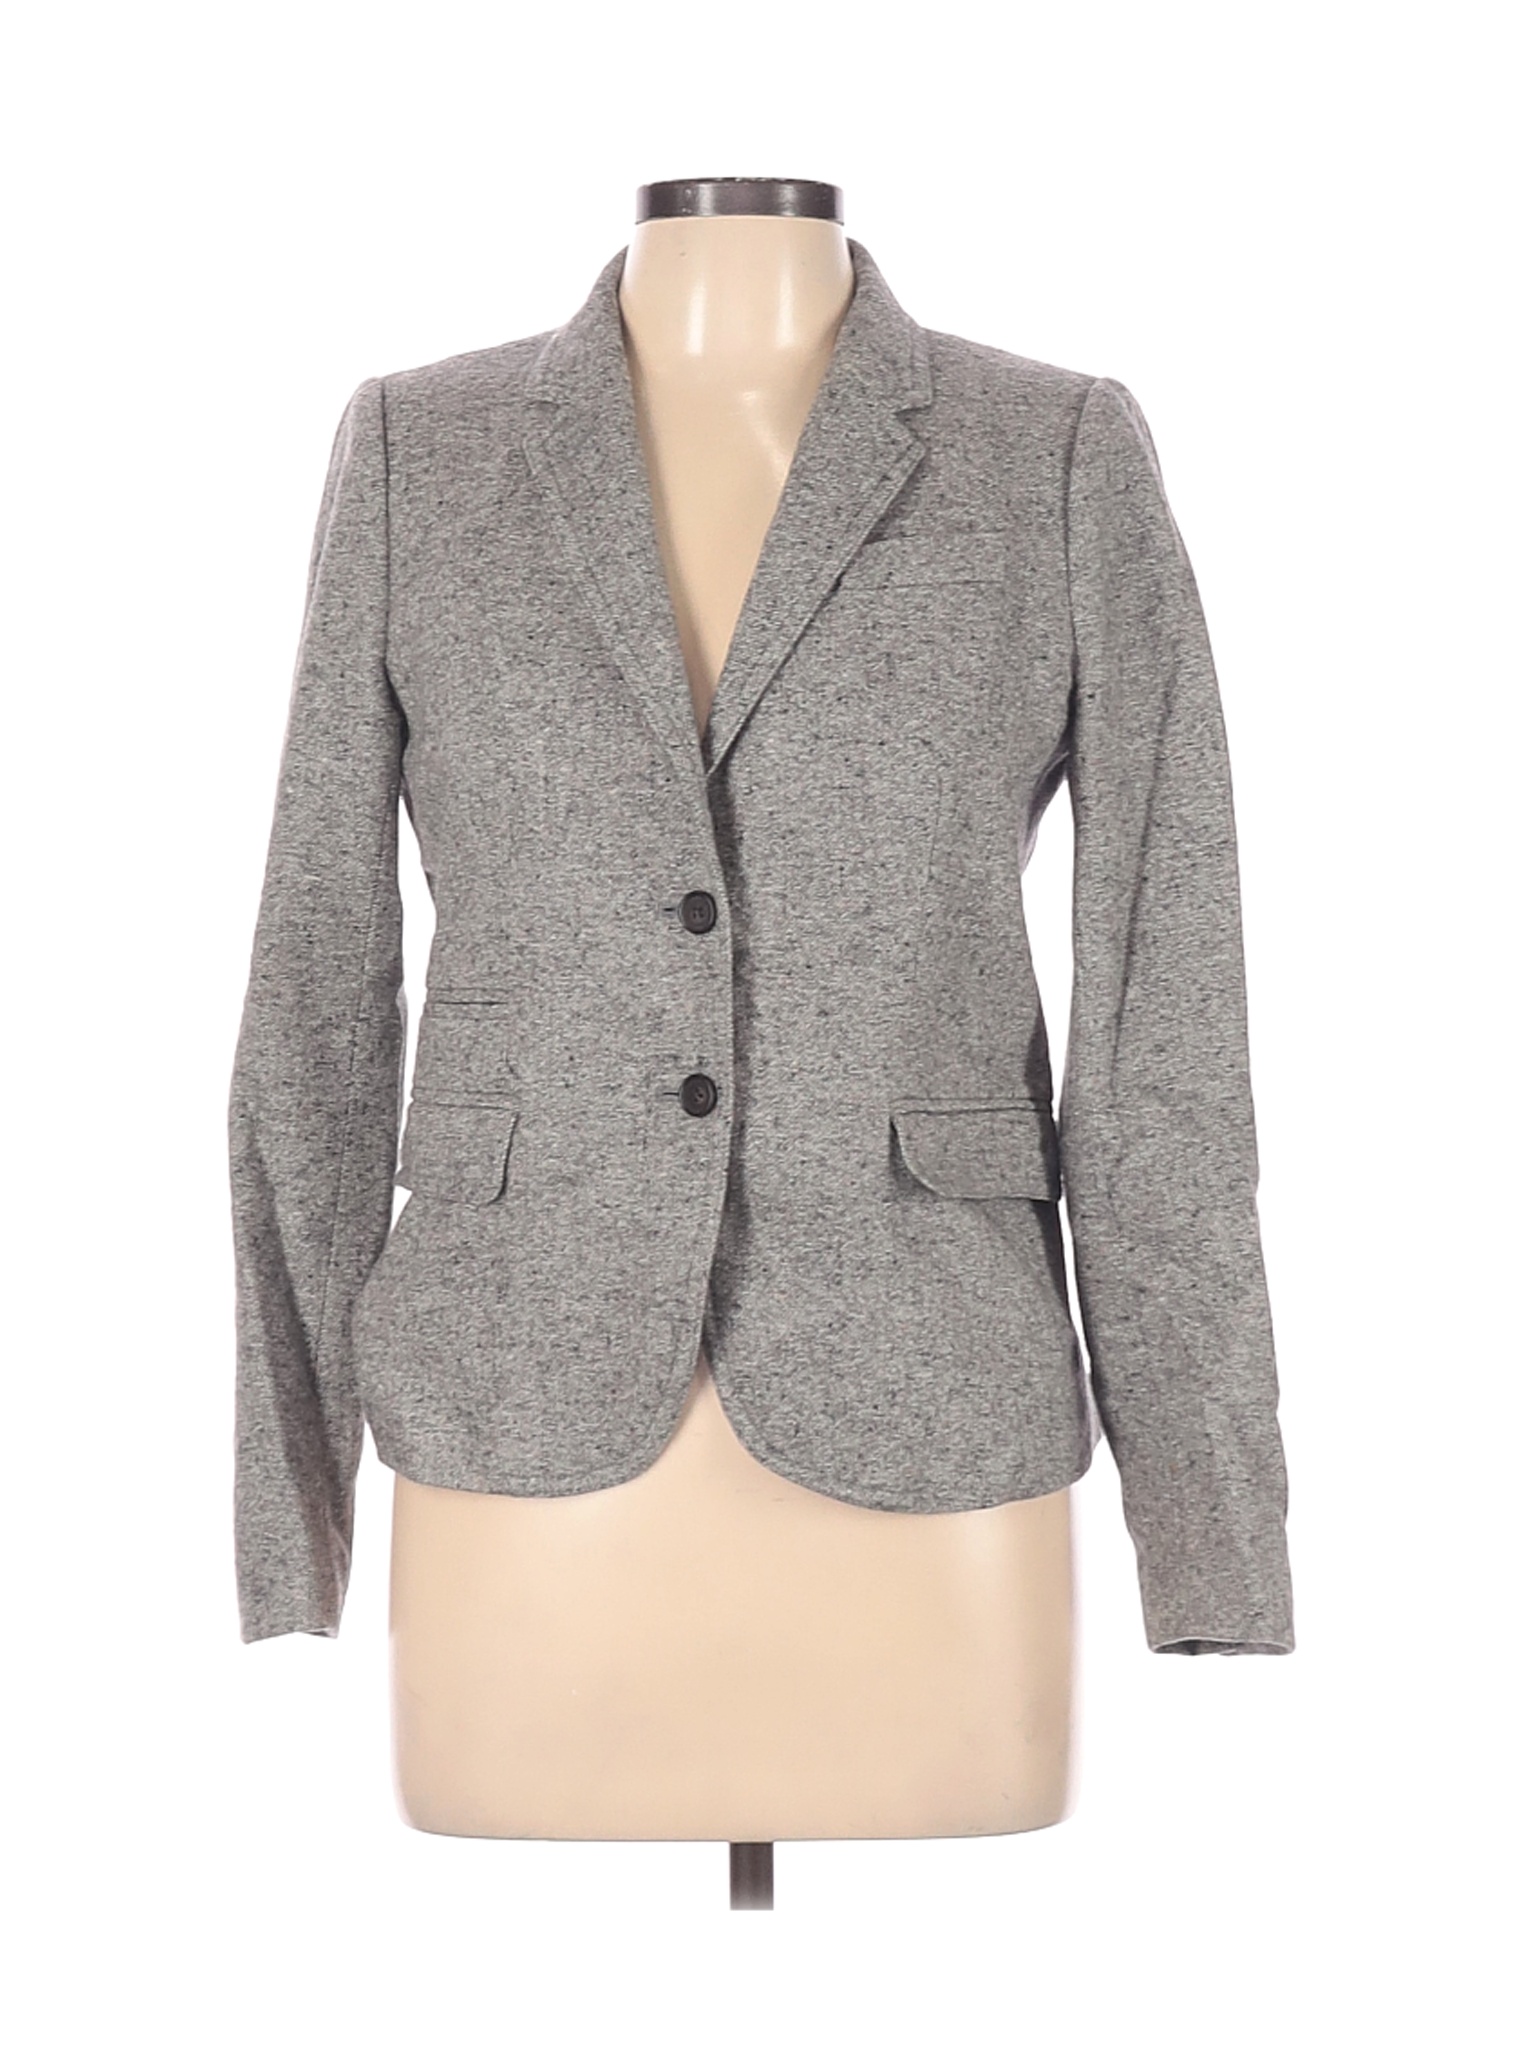 J.Crew Women Gray Wool Blazer 6 | eBay